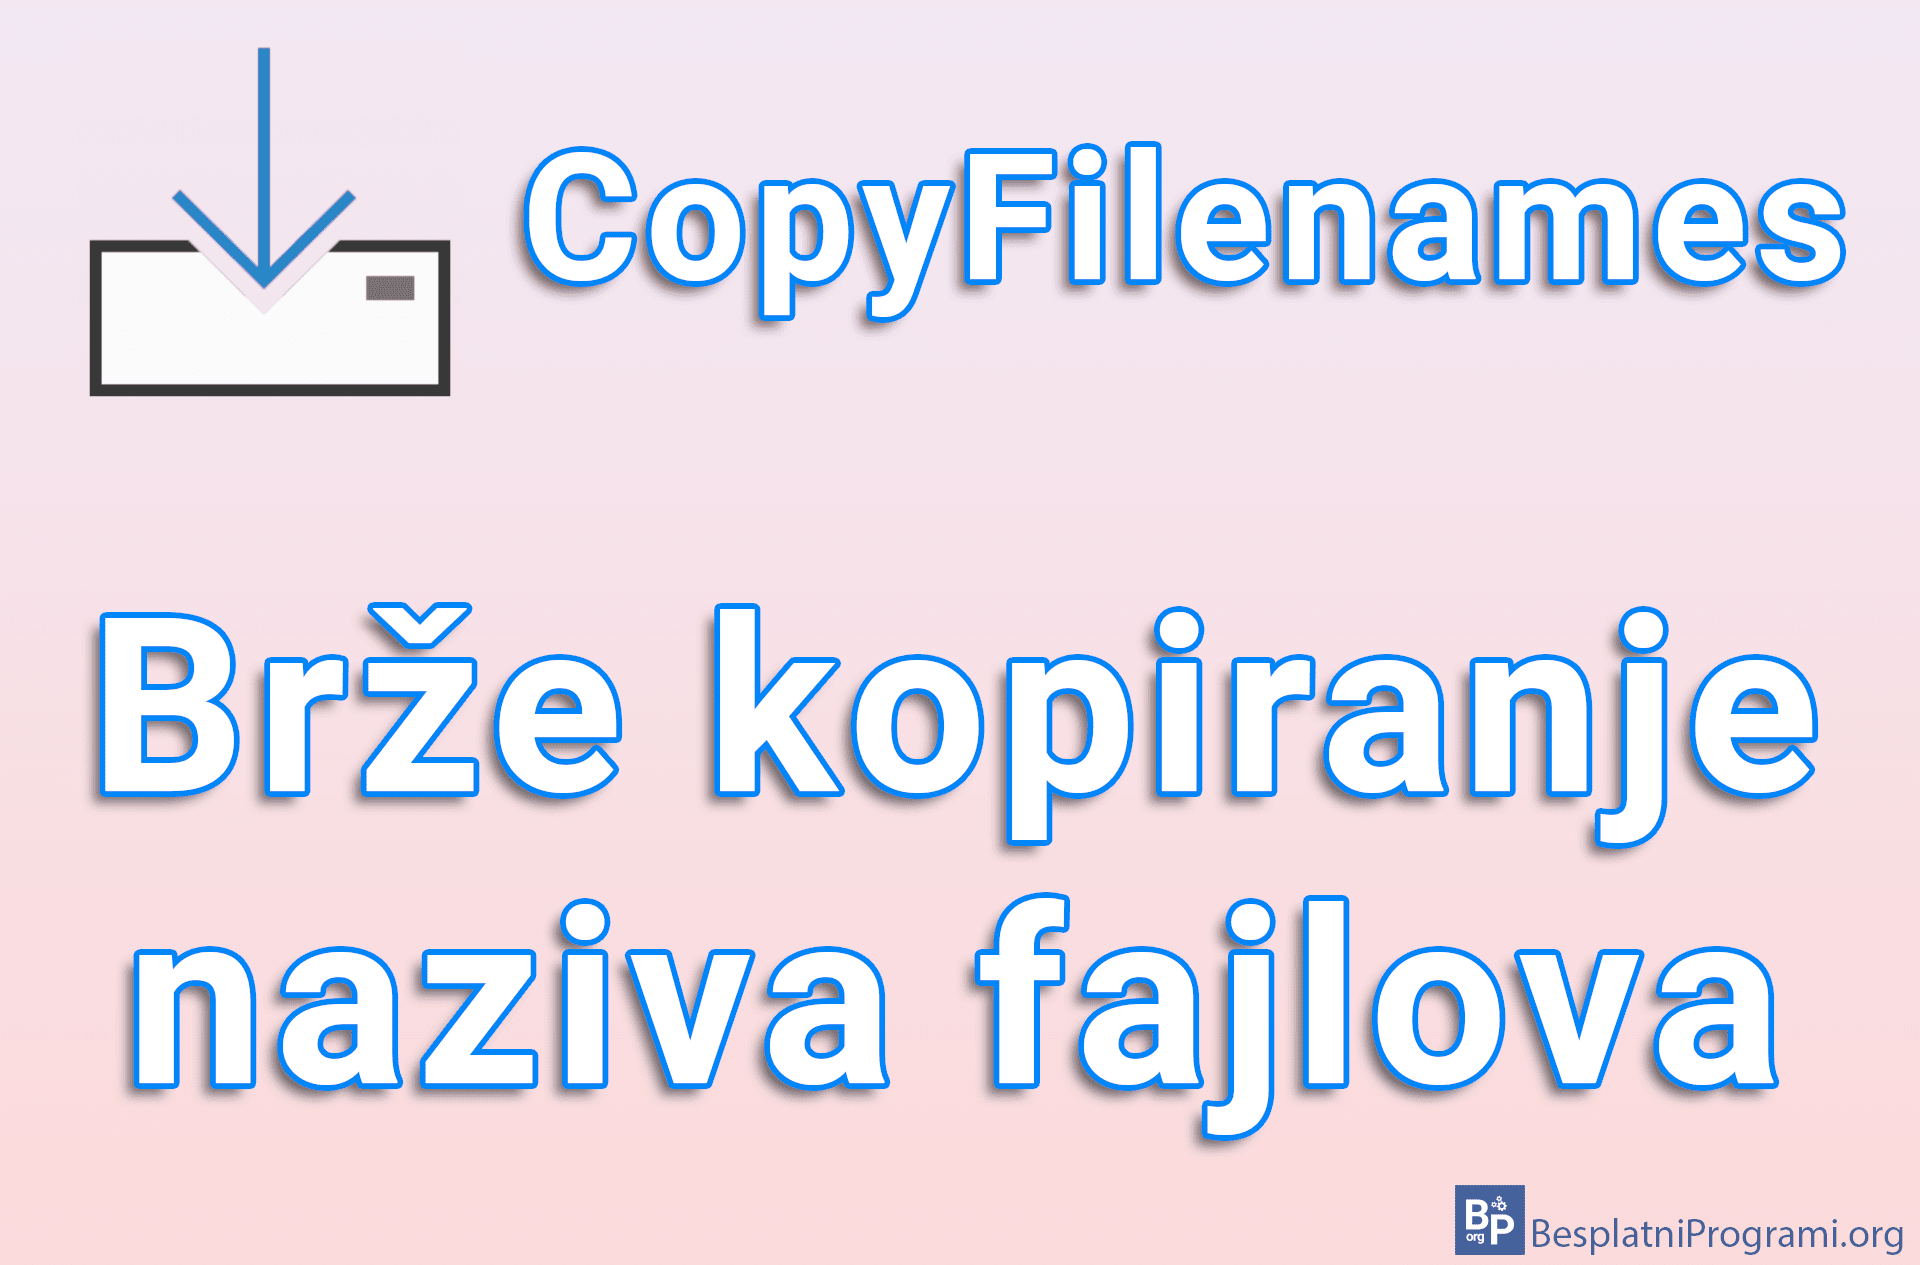 CopyFilenames – Brže kopiranje naziva fajlova